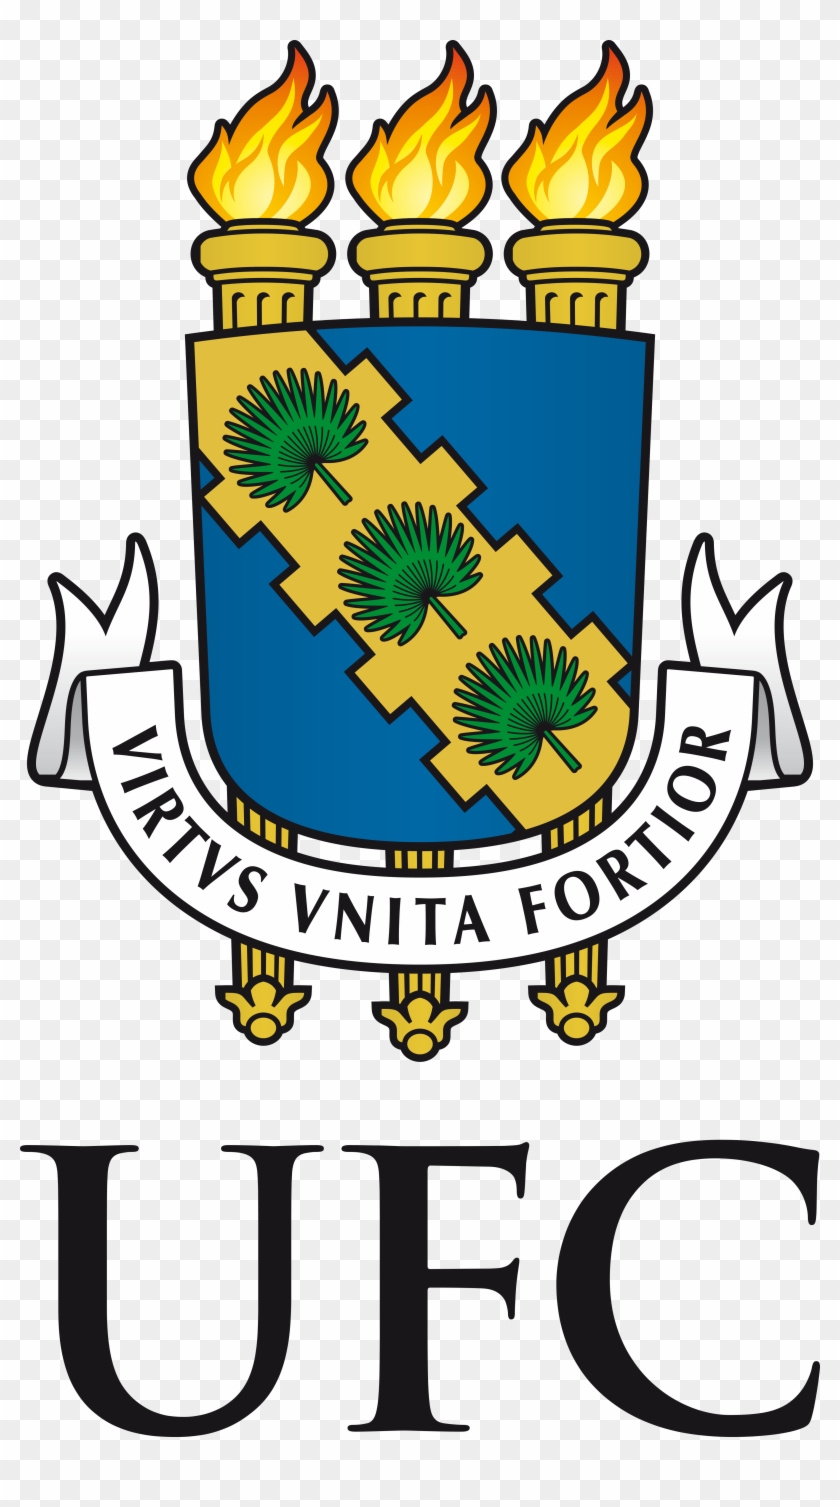 Ufc Logo Universidade - Federal University Of Ceará Clipart #1112014